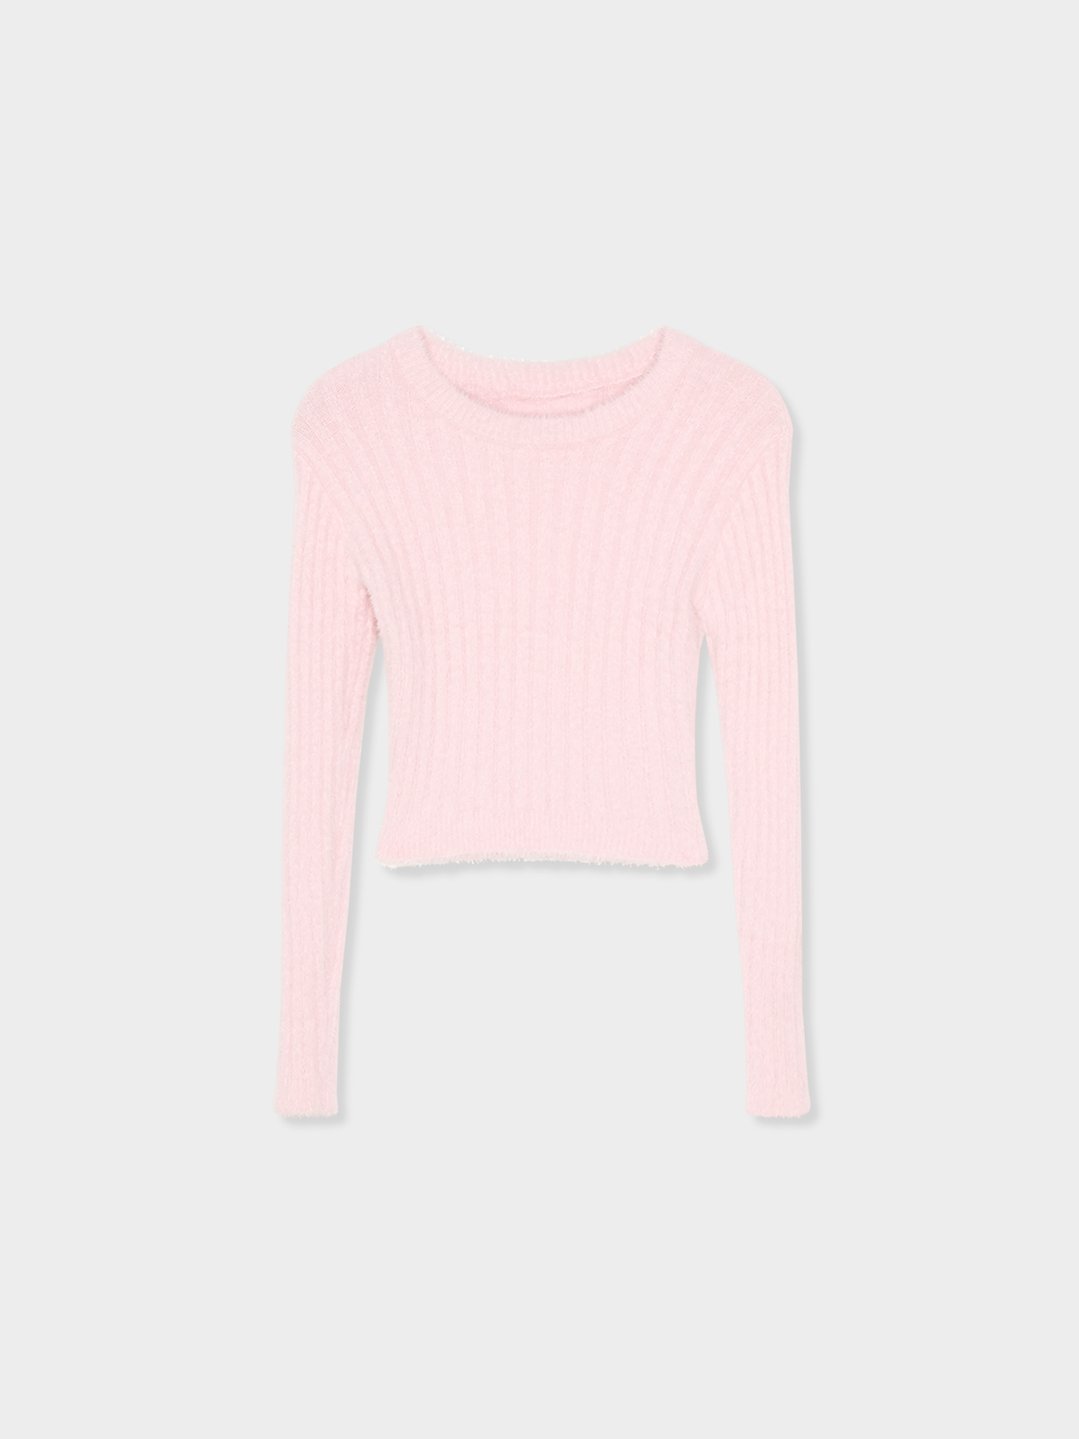 Vegetation mattress Competitive Rib Knit Long Sleeve Crop Top - Pink - Pomelo Fashion